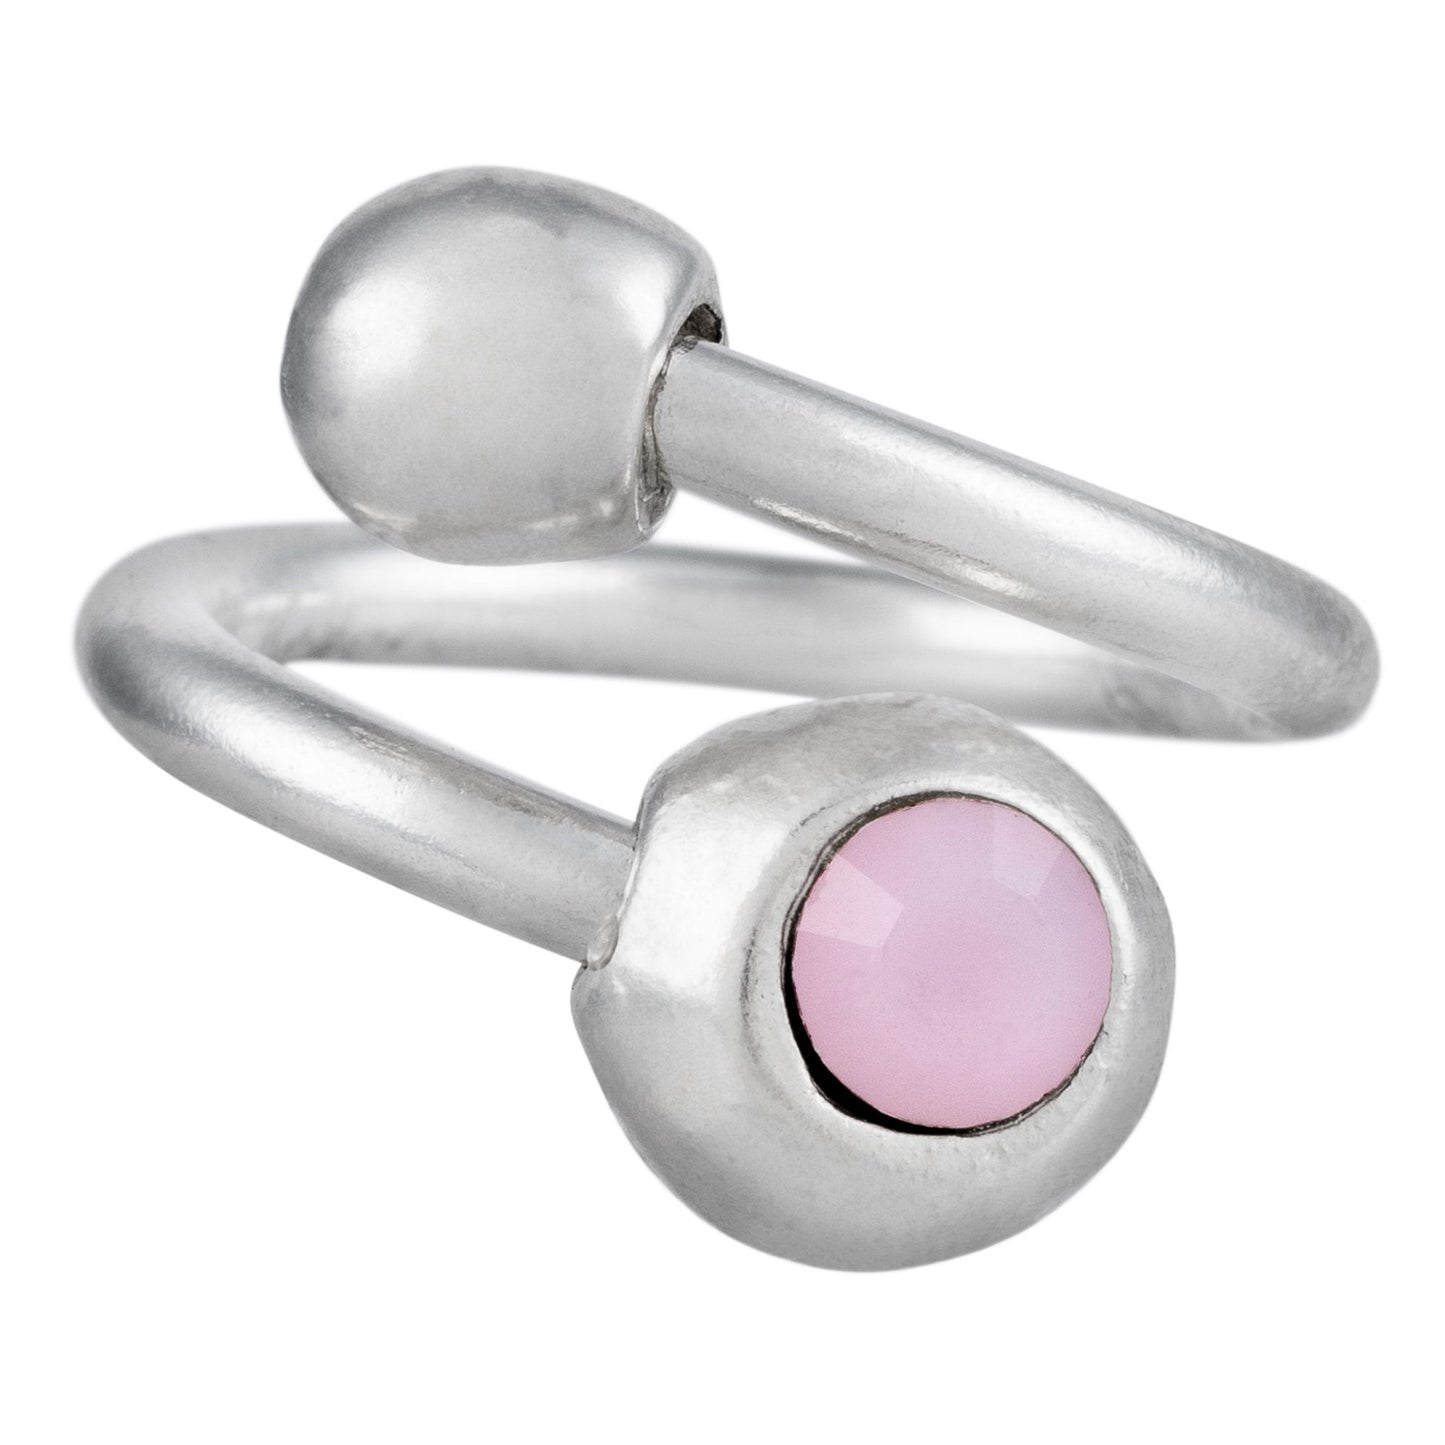 Pale pink Swarovski plated 925 silver ring